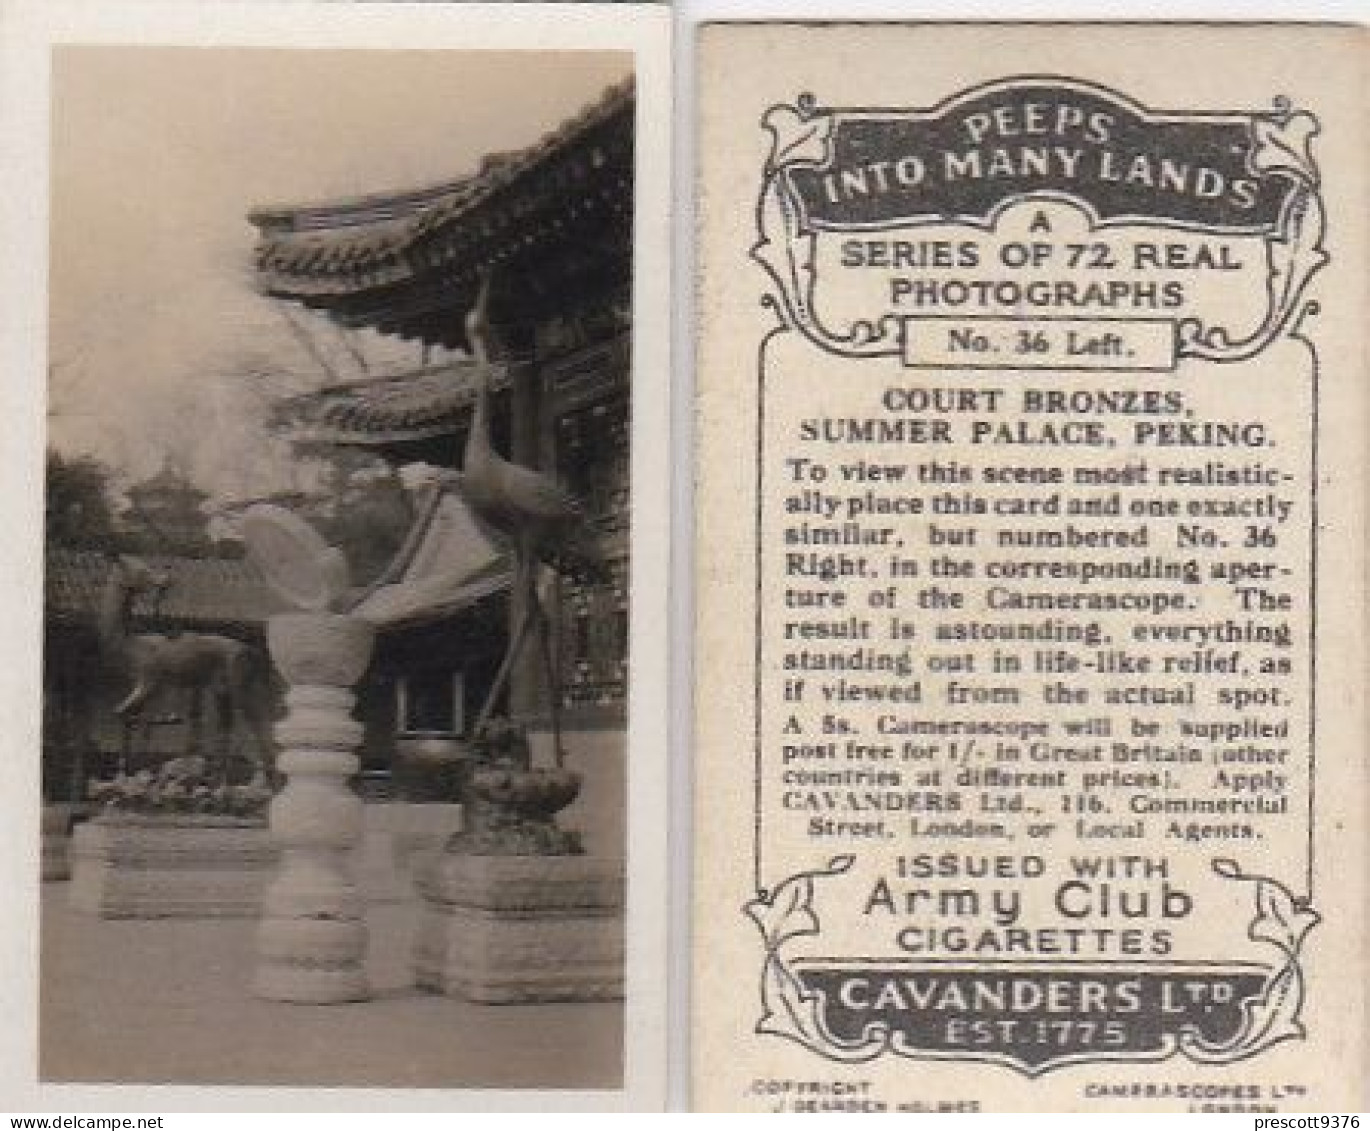 36 Court Bronzes, Summer Palace, Peking - PEEPS INTO MANY LANDS A 1927 - Cavenders RP Stereoscope Cards 3x6cm - Visionneuses Stéréoscopiques